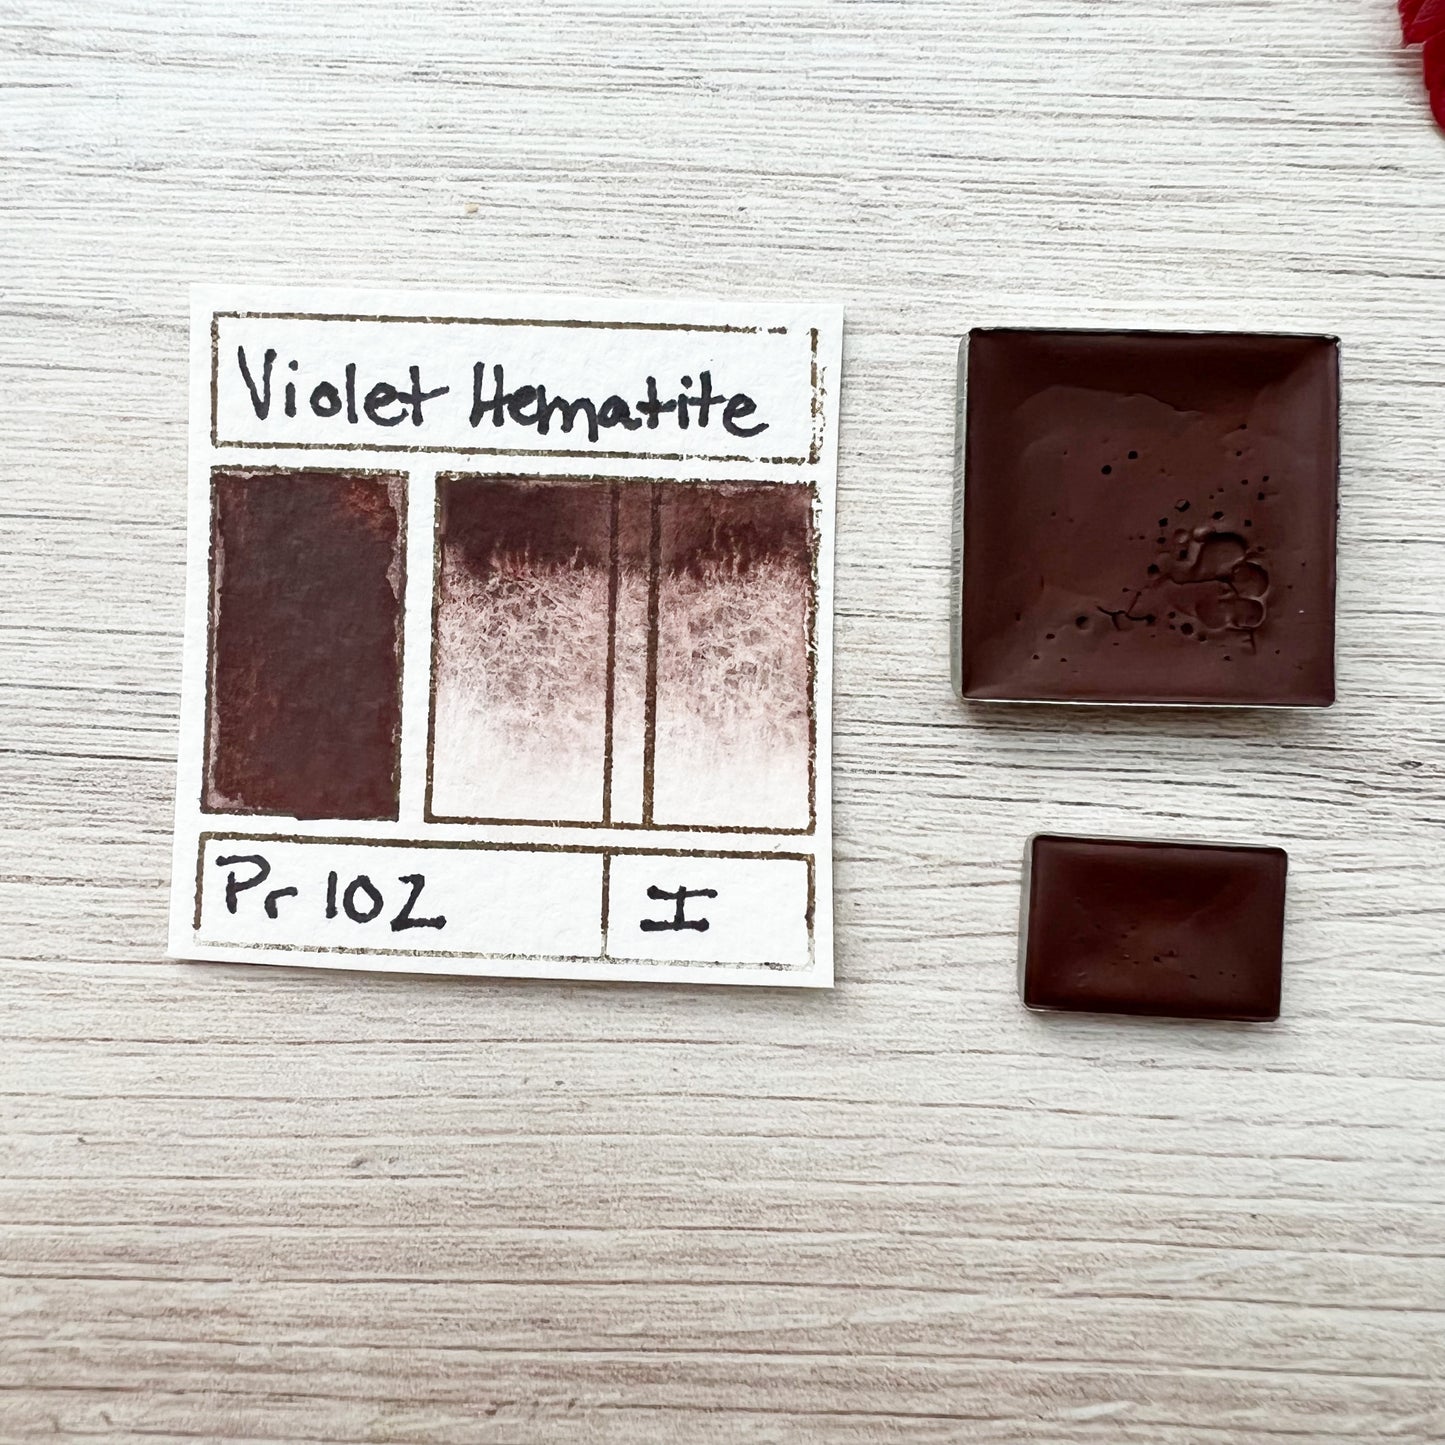 Violet Hematite. Half pan, full pan or bottle cap of handmade watercolor paint